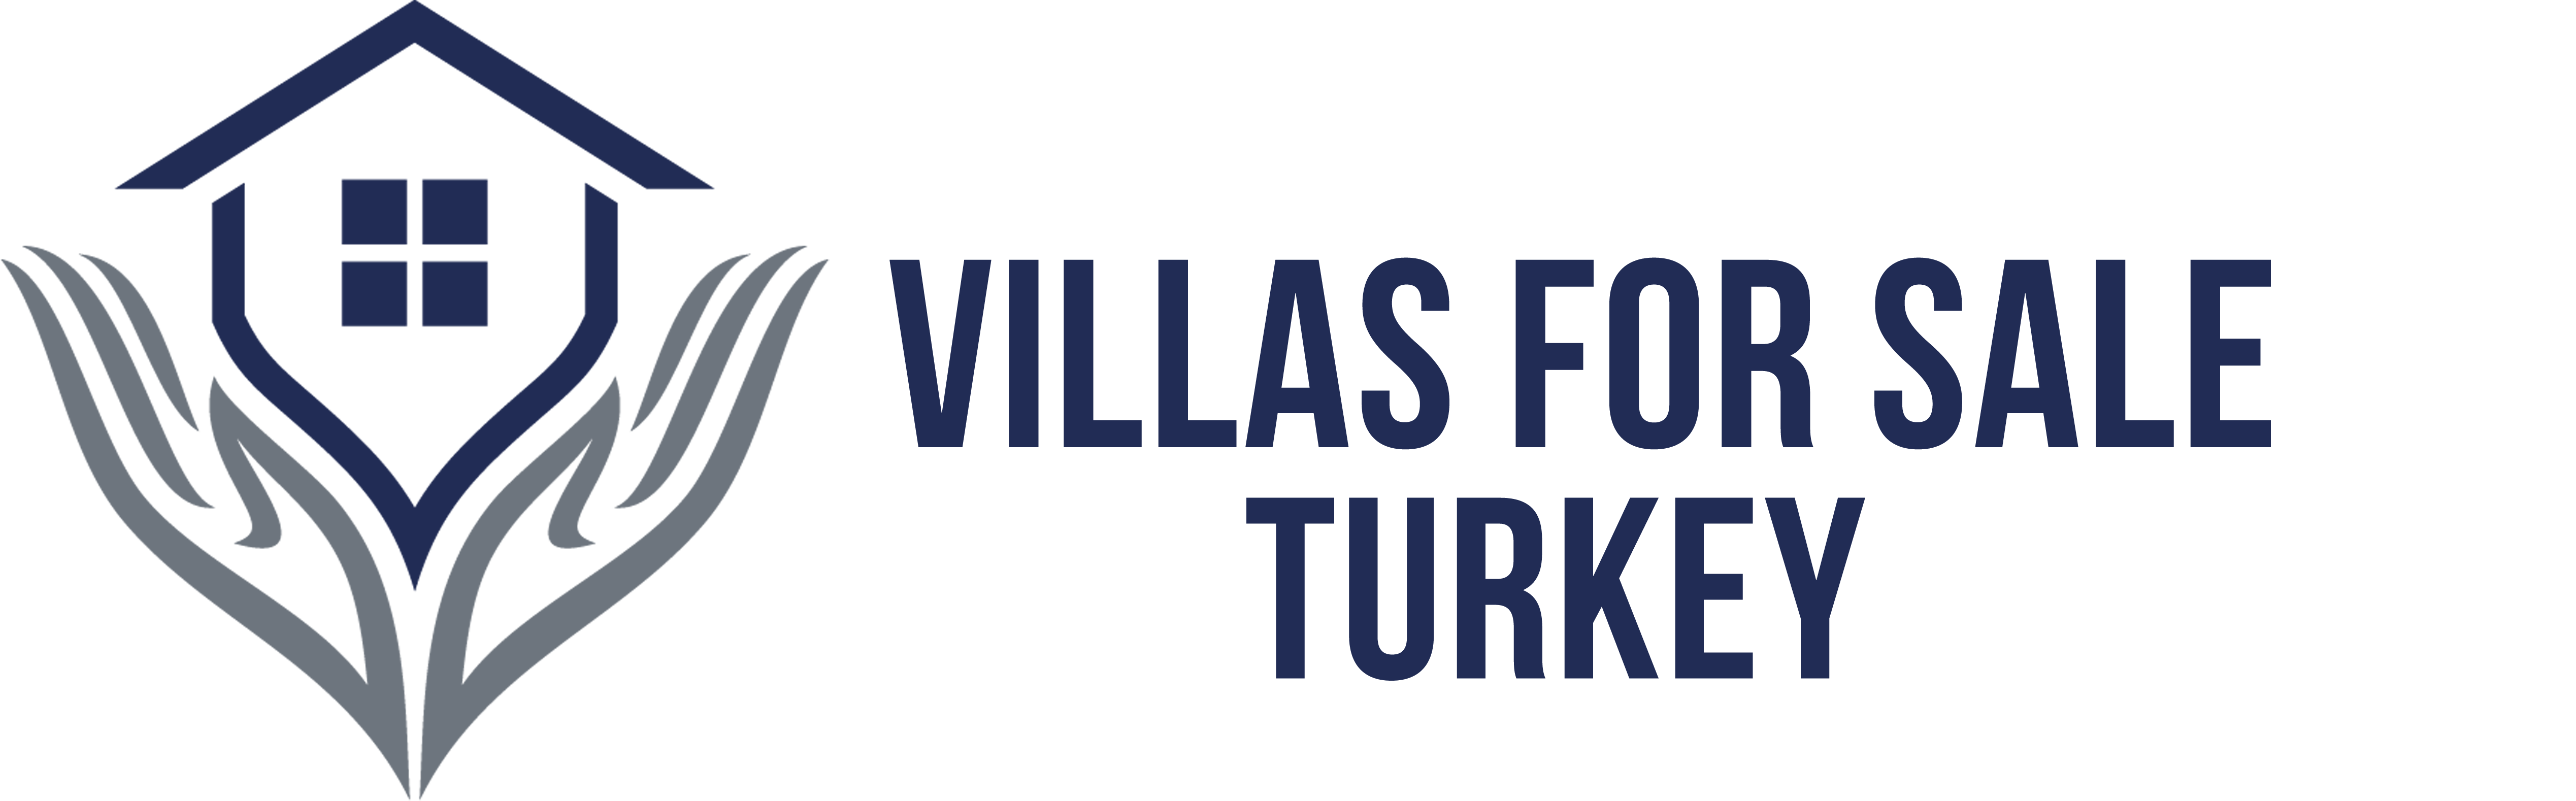 Vilas For Sale Turkey